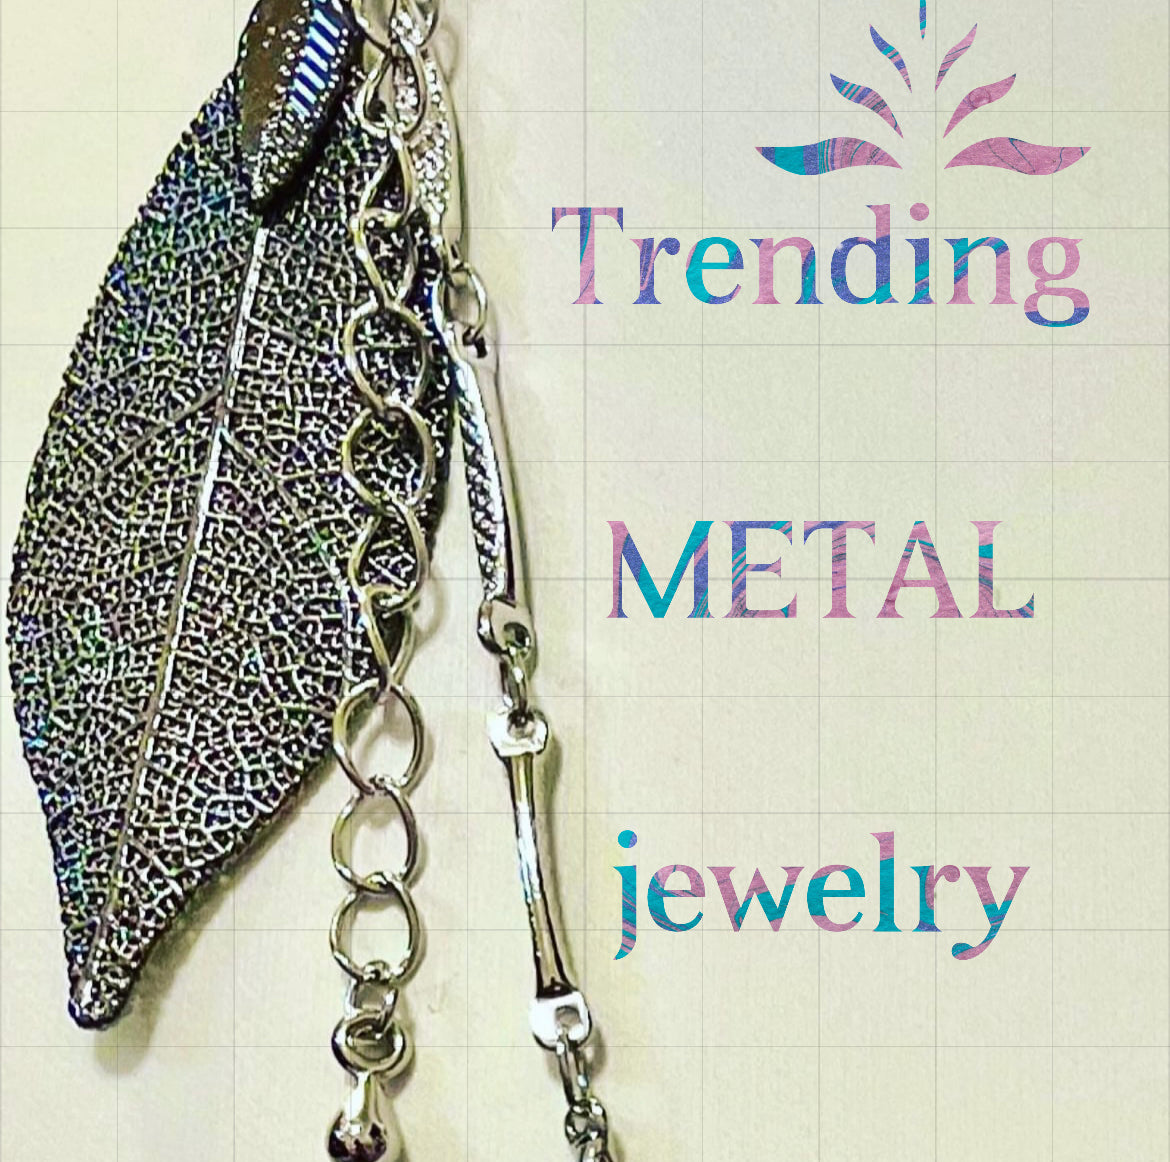 Load video: Trending metal jewelry